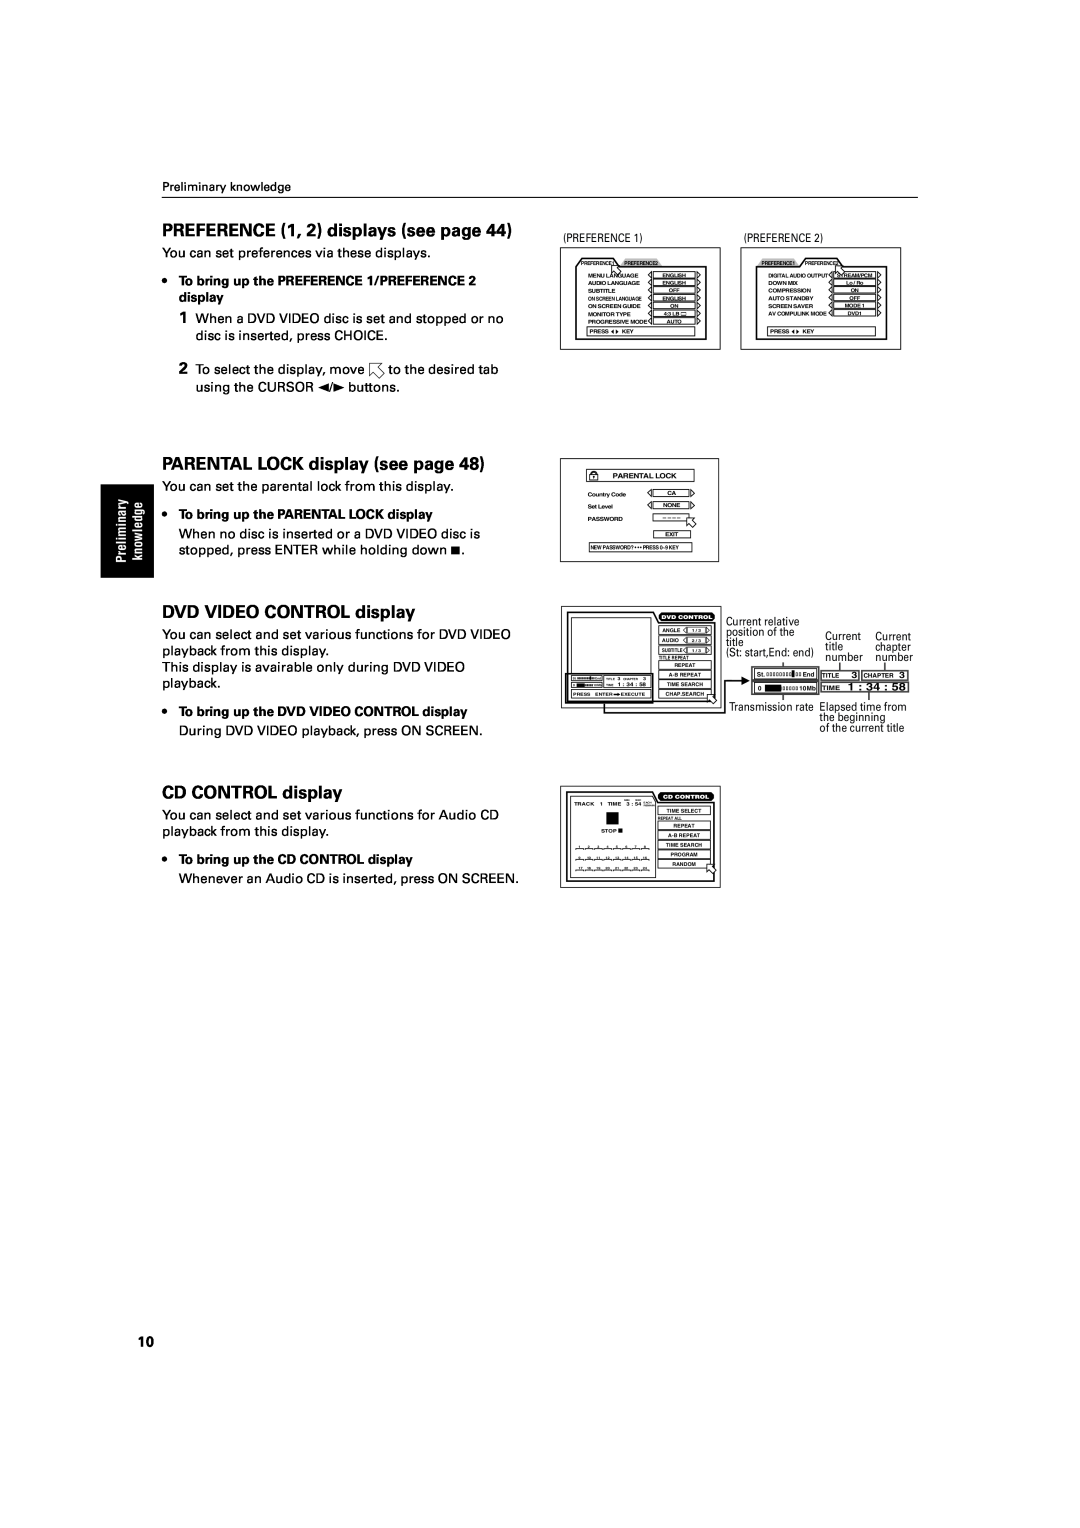 JVC XV-S60 manual PREFERENCE 1, 2 displays see page, PARENTAL LOCK display see page, DVD VIDEO CONTROL display 